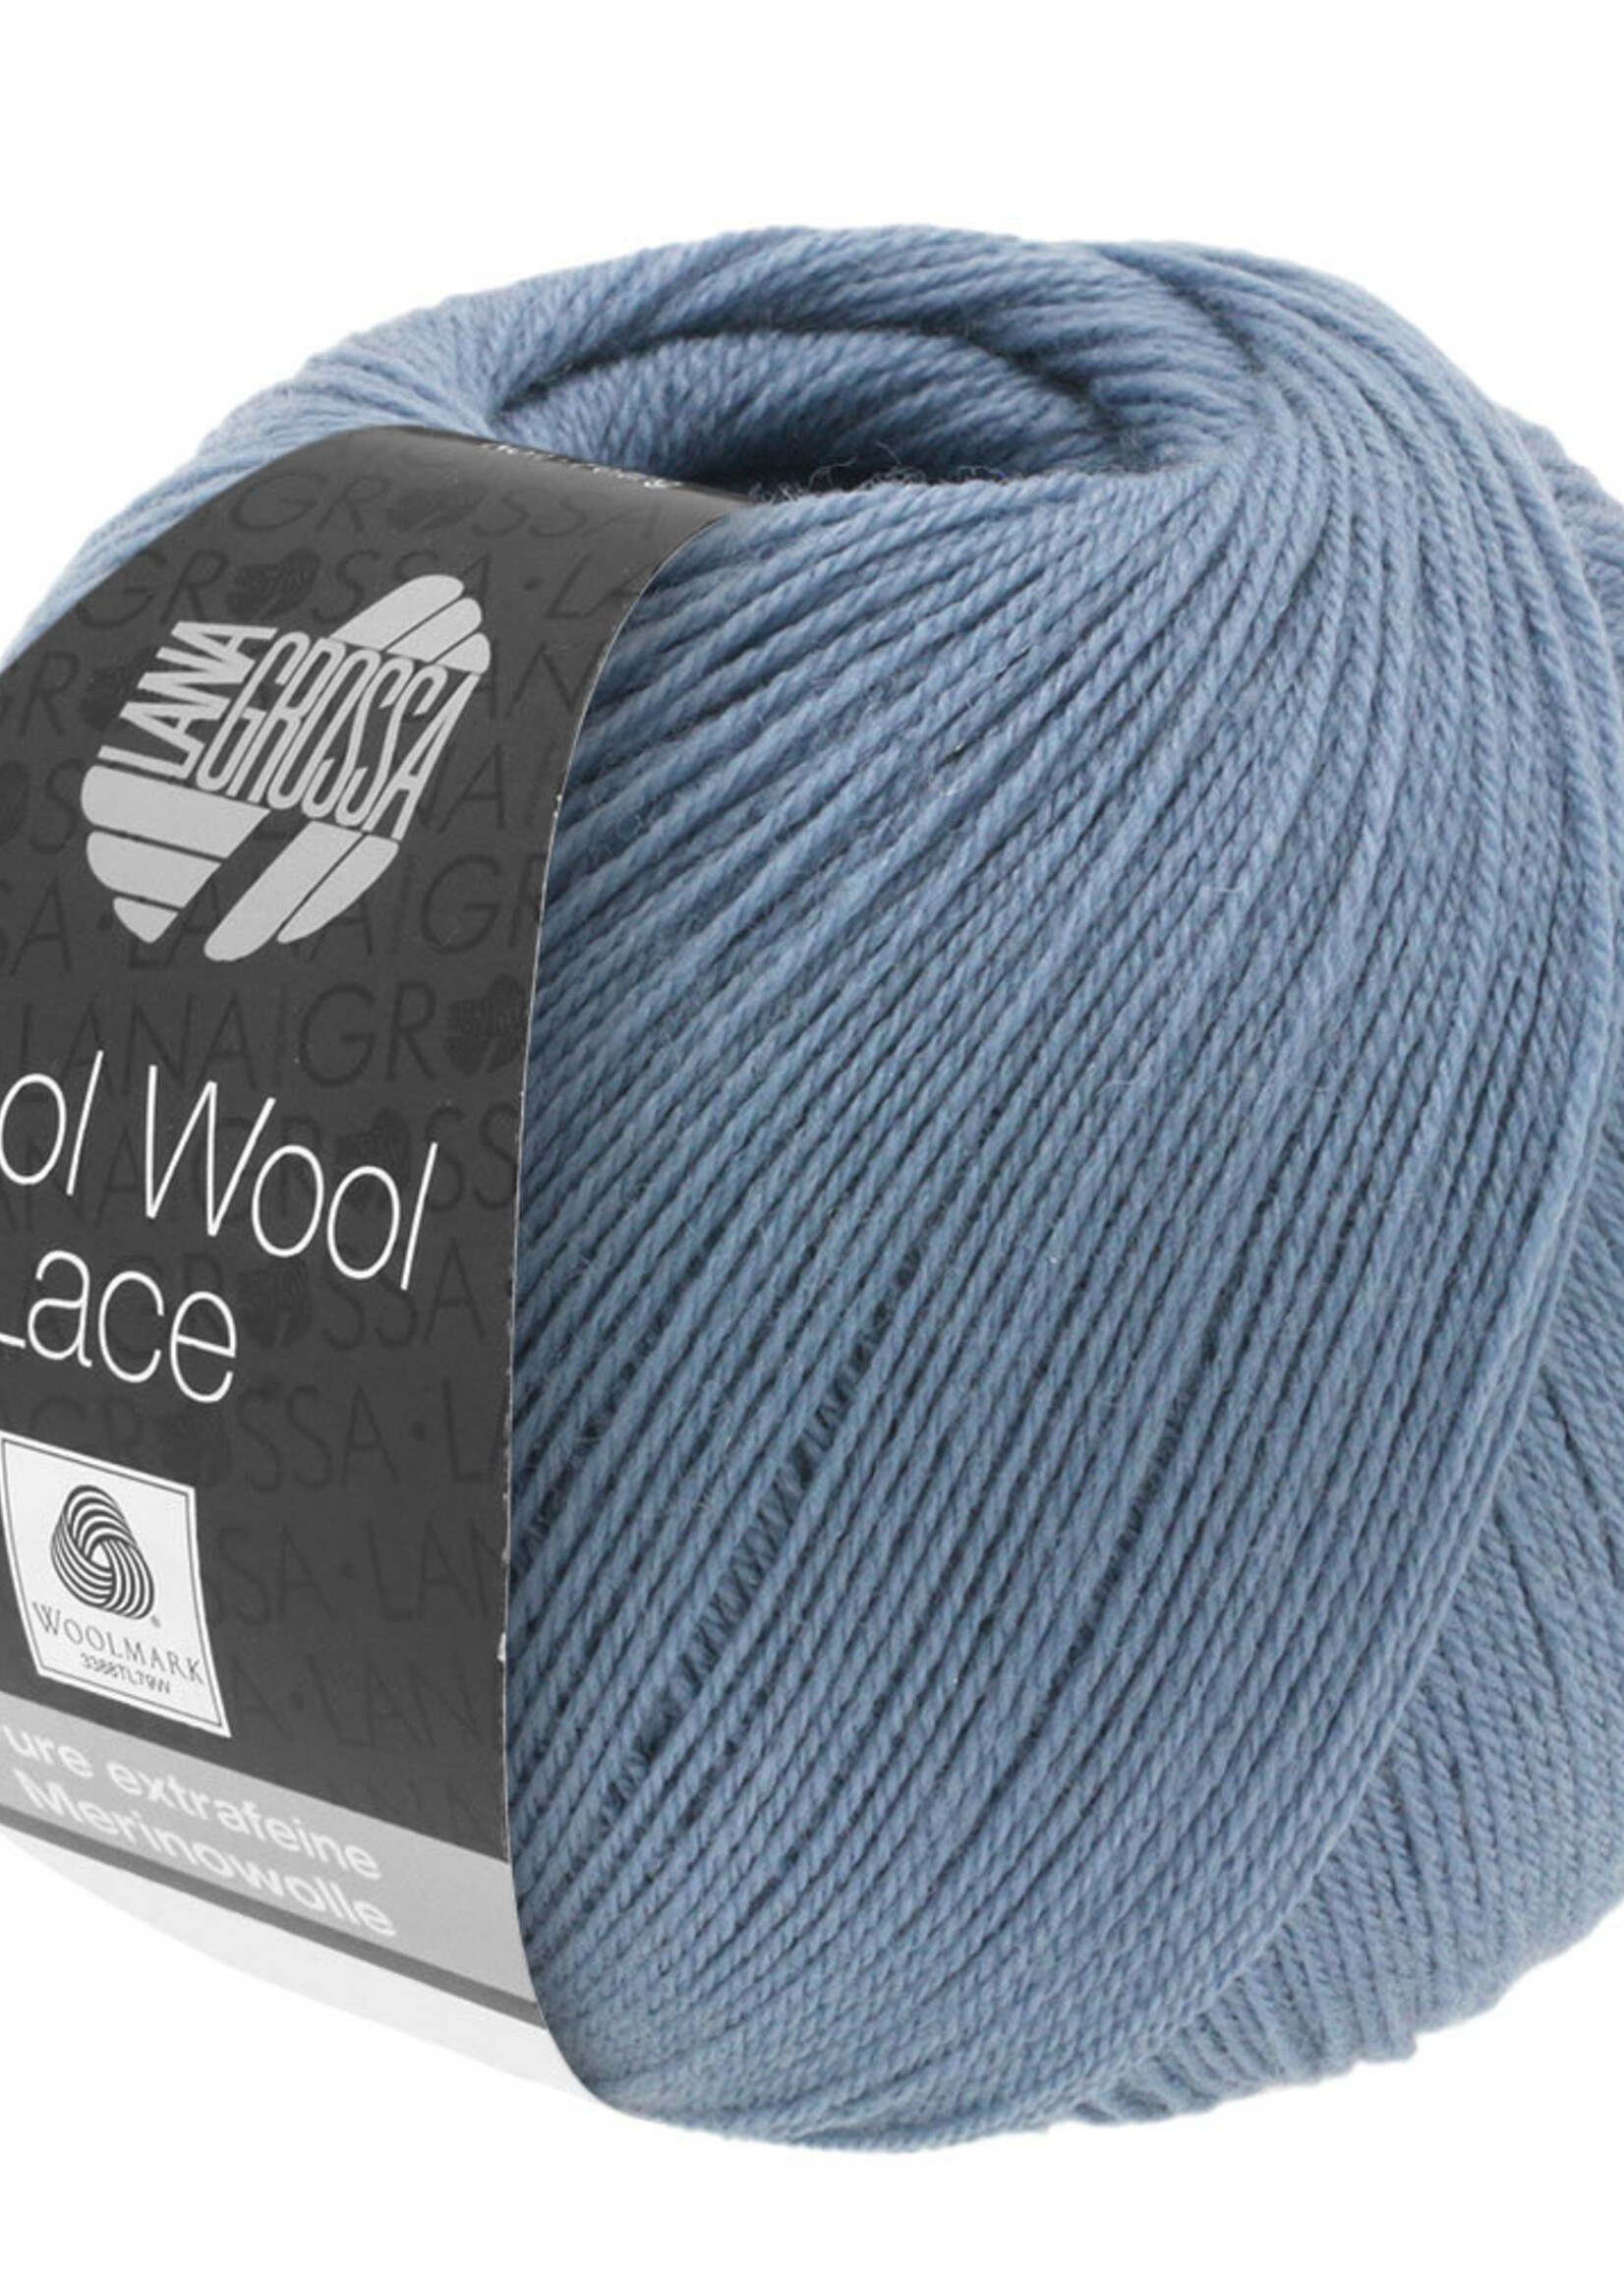 Lana Grossa Cool Wool Lace - Lana Grossa 002-duifblauw